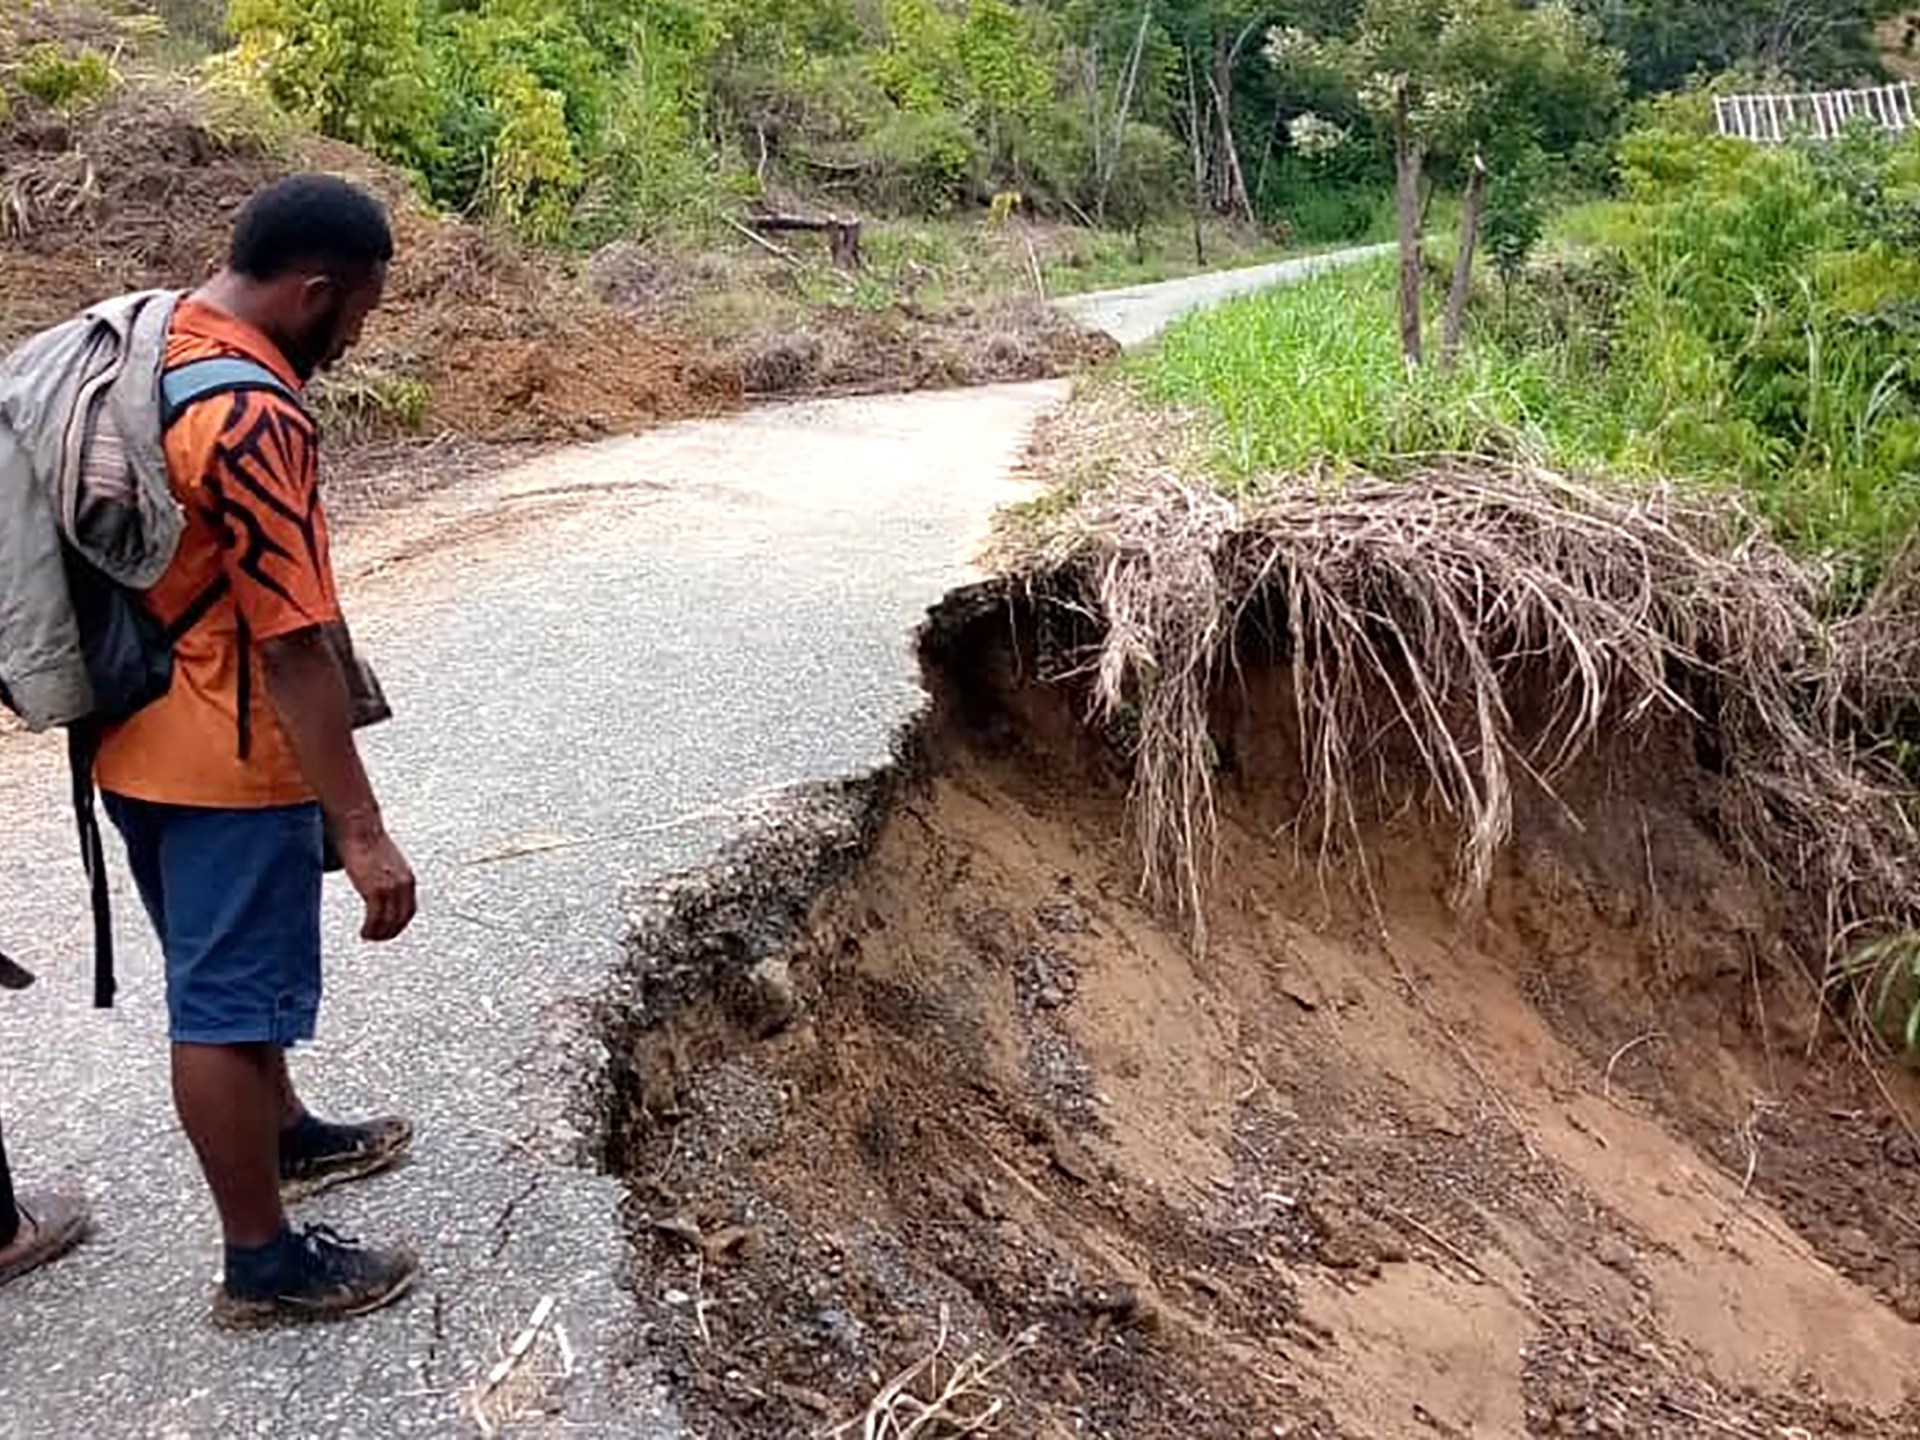 Papua New Guinea floods, landslides leave at least 23 dead